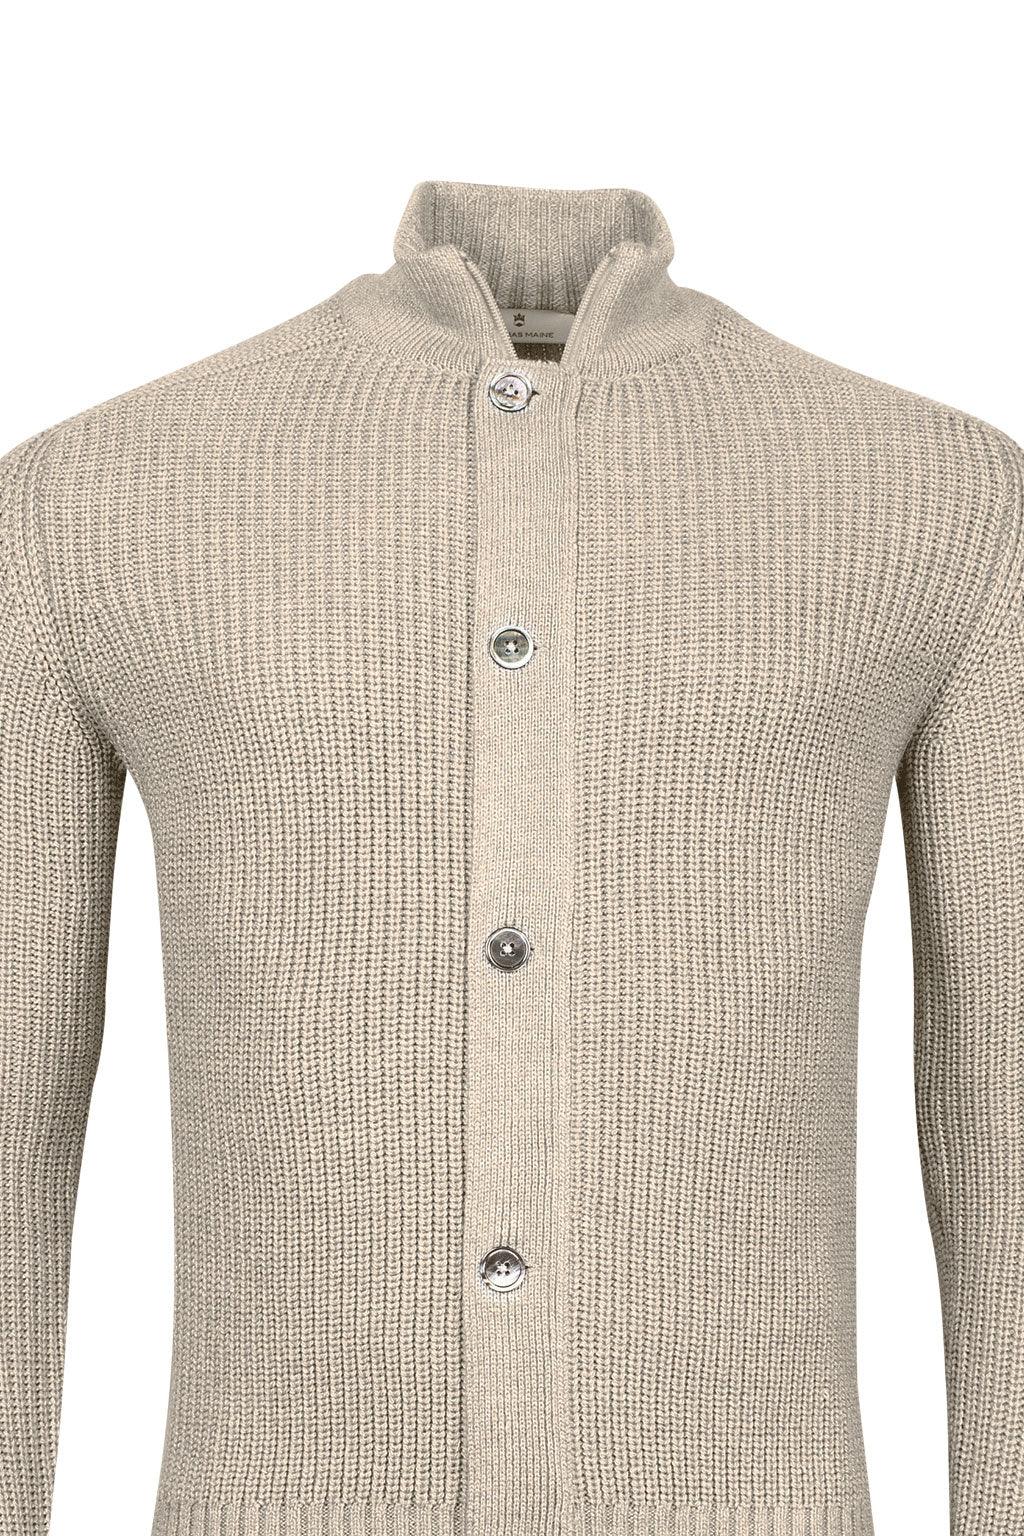 Thomas Maine vest - Big Boss | the menswear concept